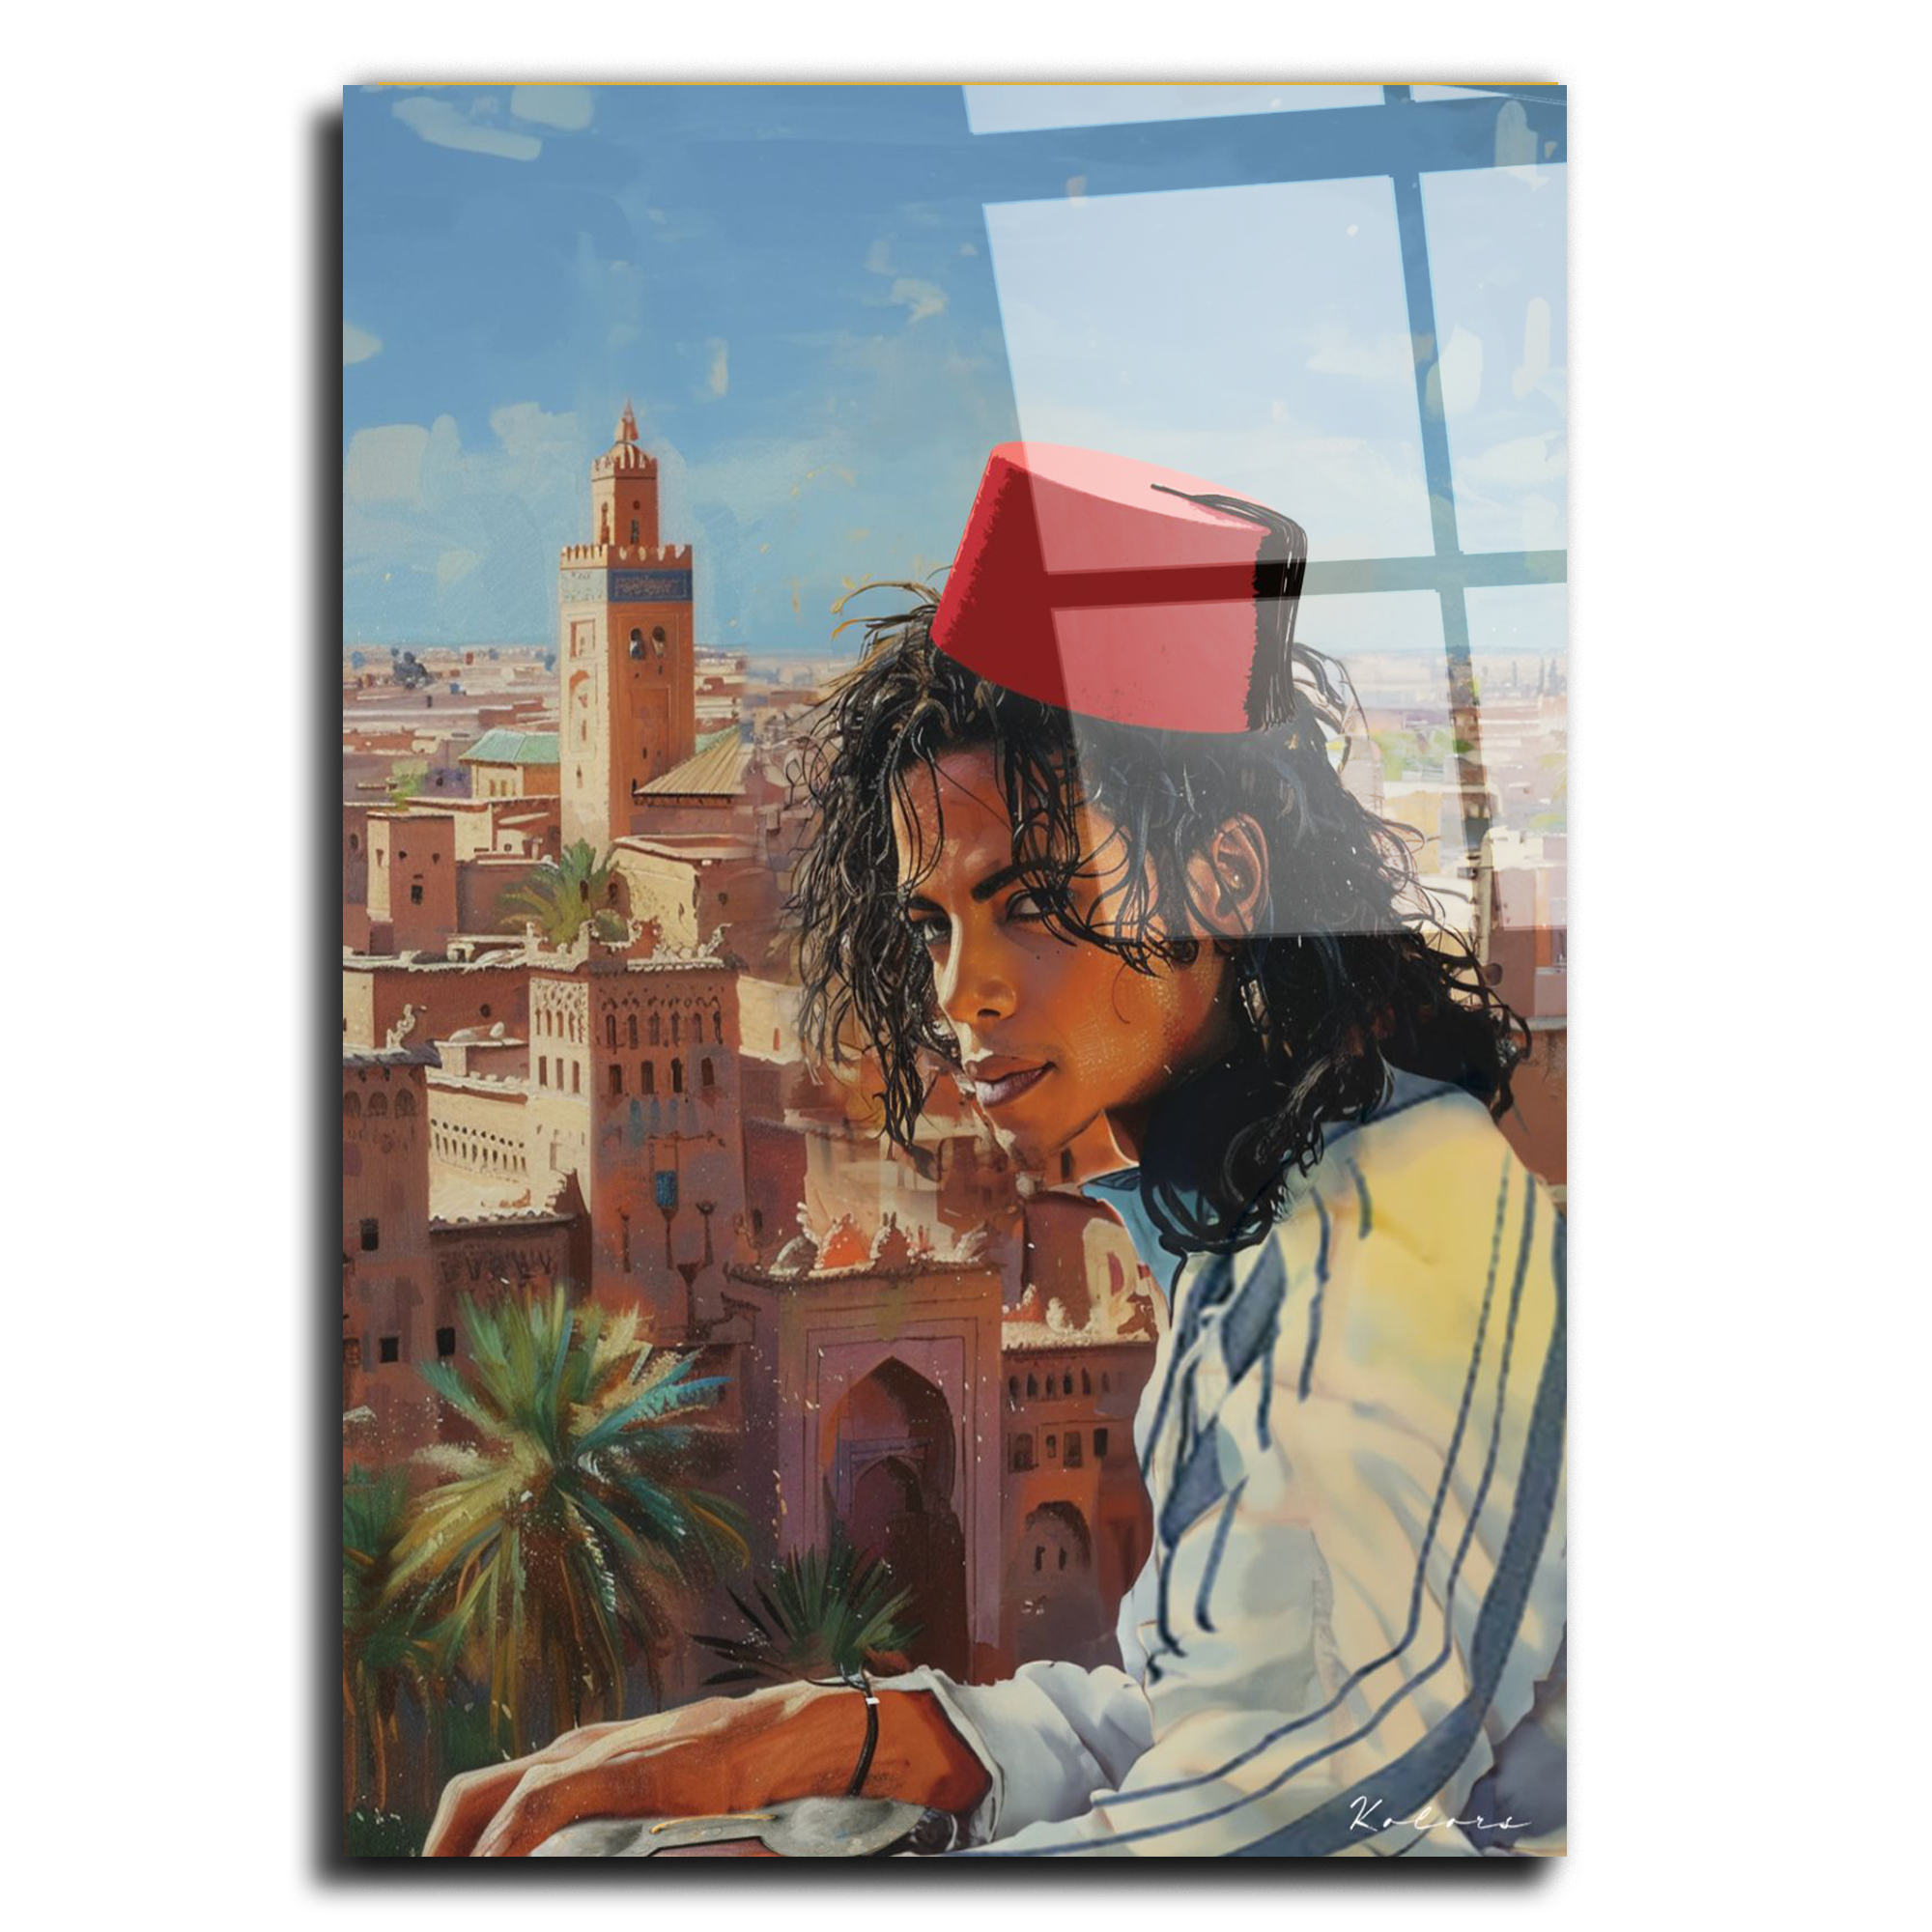 Michel à Marrakech